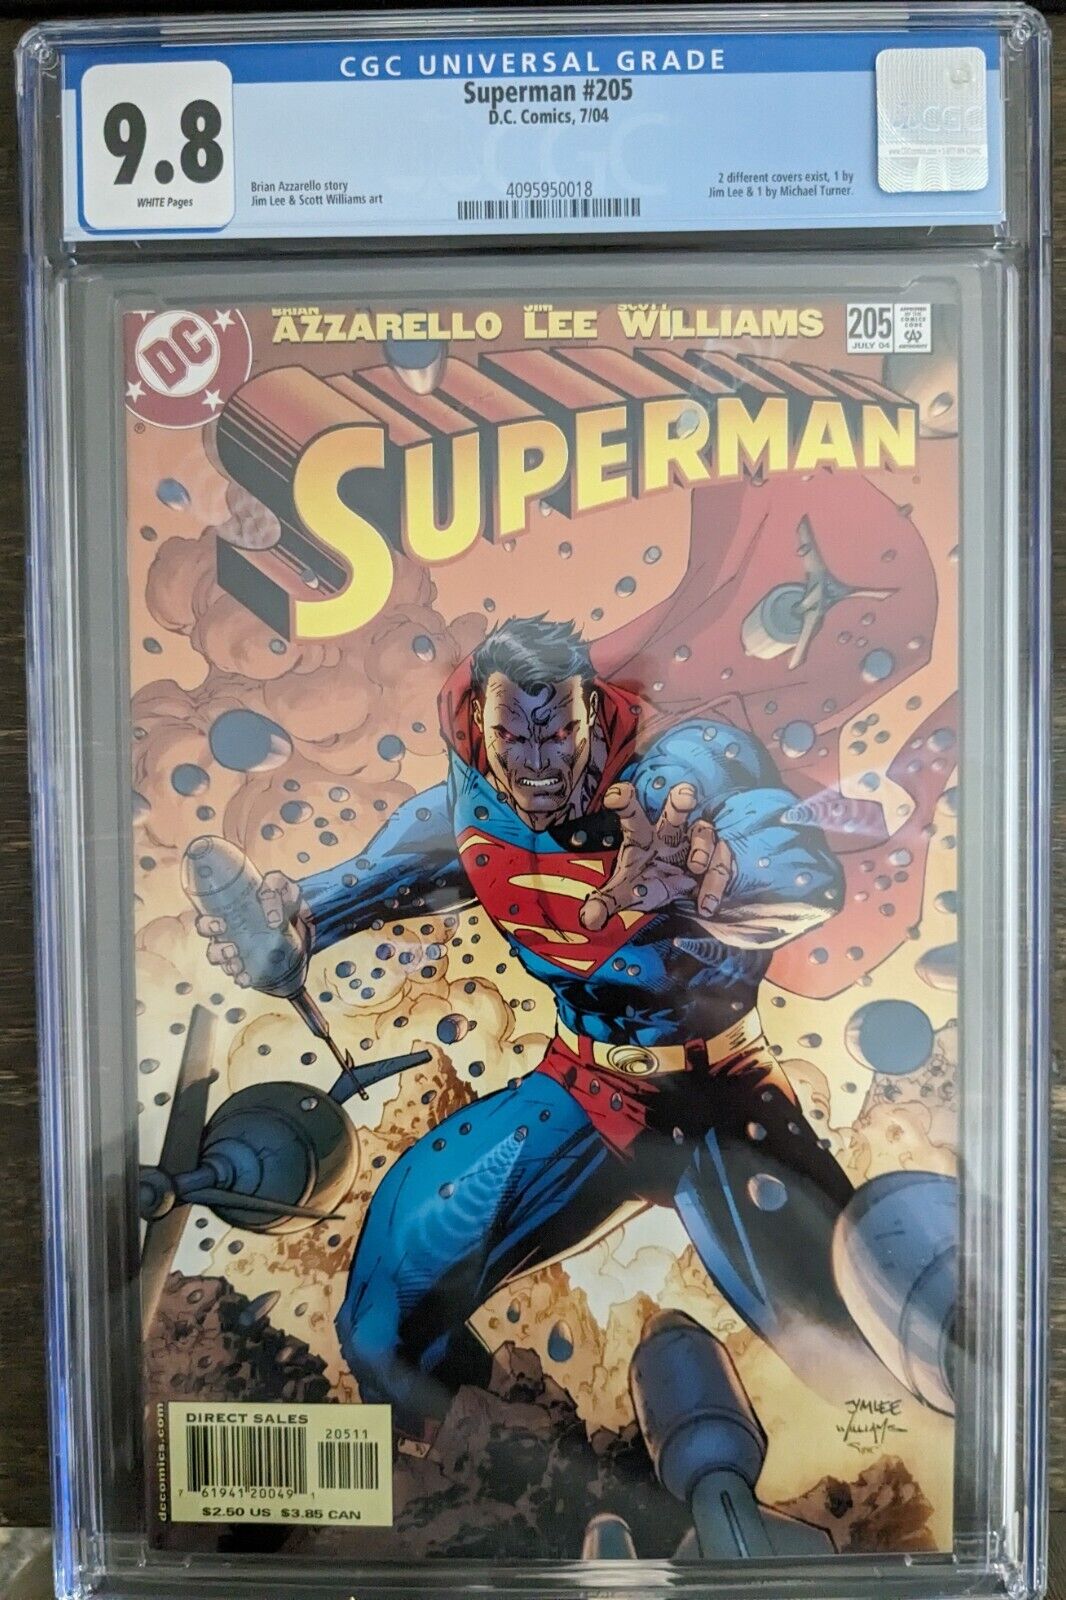 SUPERMAN #205 - CGC - 9.8 - JIM LEE & SCOTT WILLIAMS ART - BRIAN AZZARELLO STORY